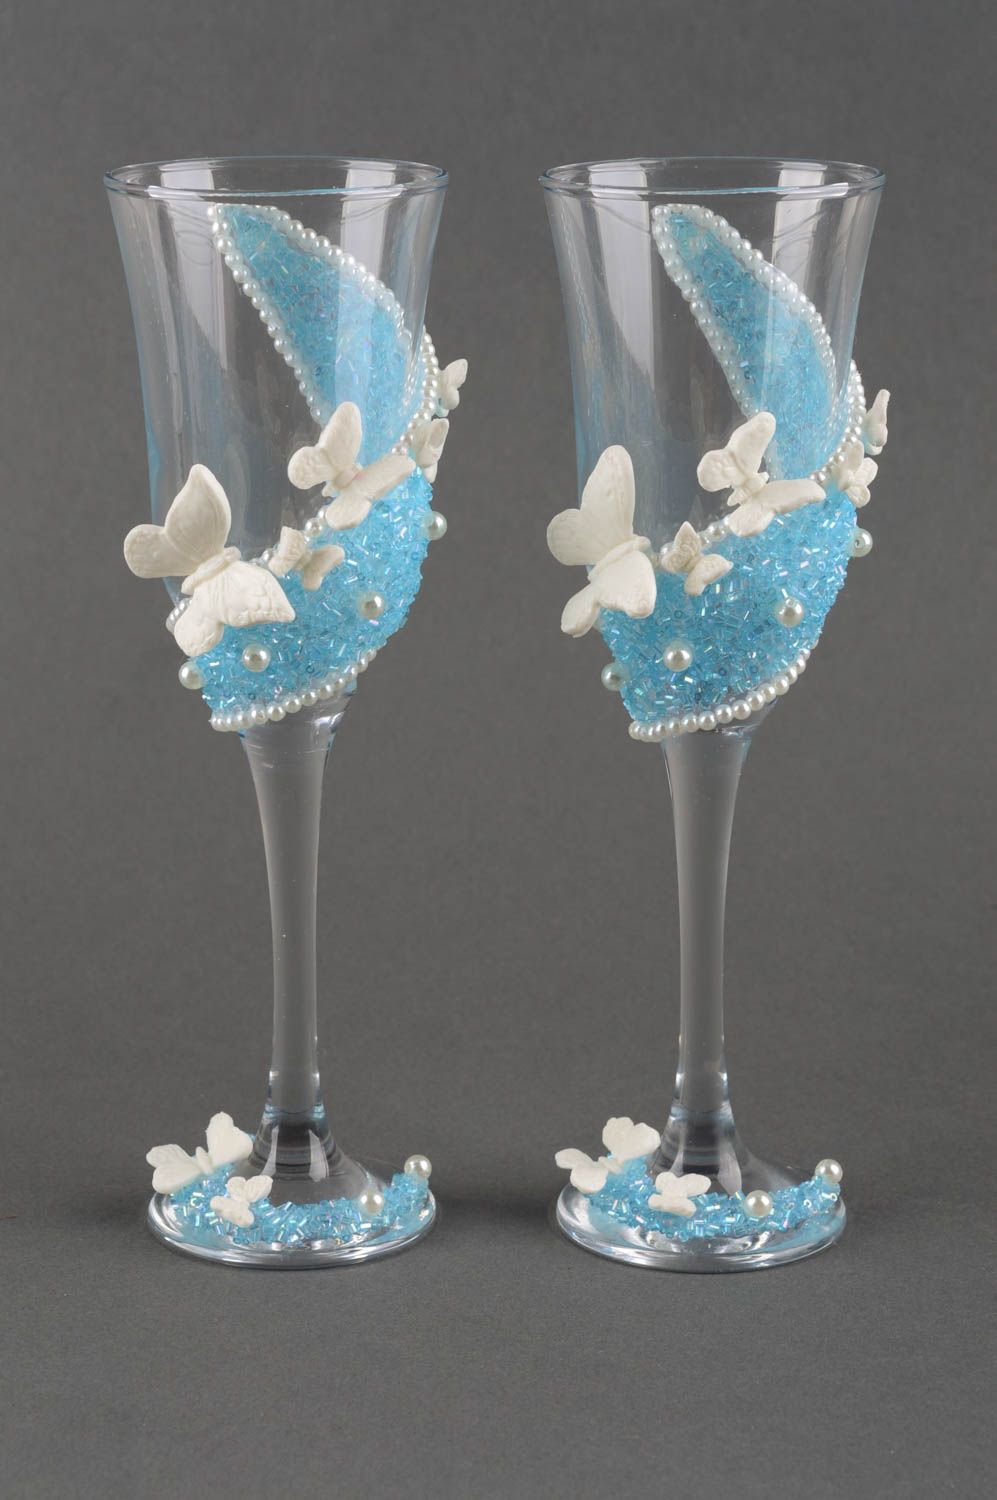 Beautiful handmade wedding glasses wine glass types wedding accessories photo 7